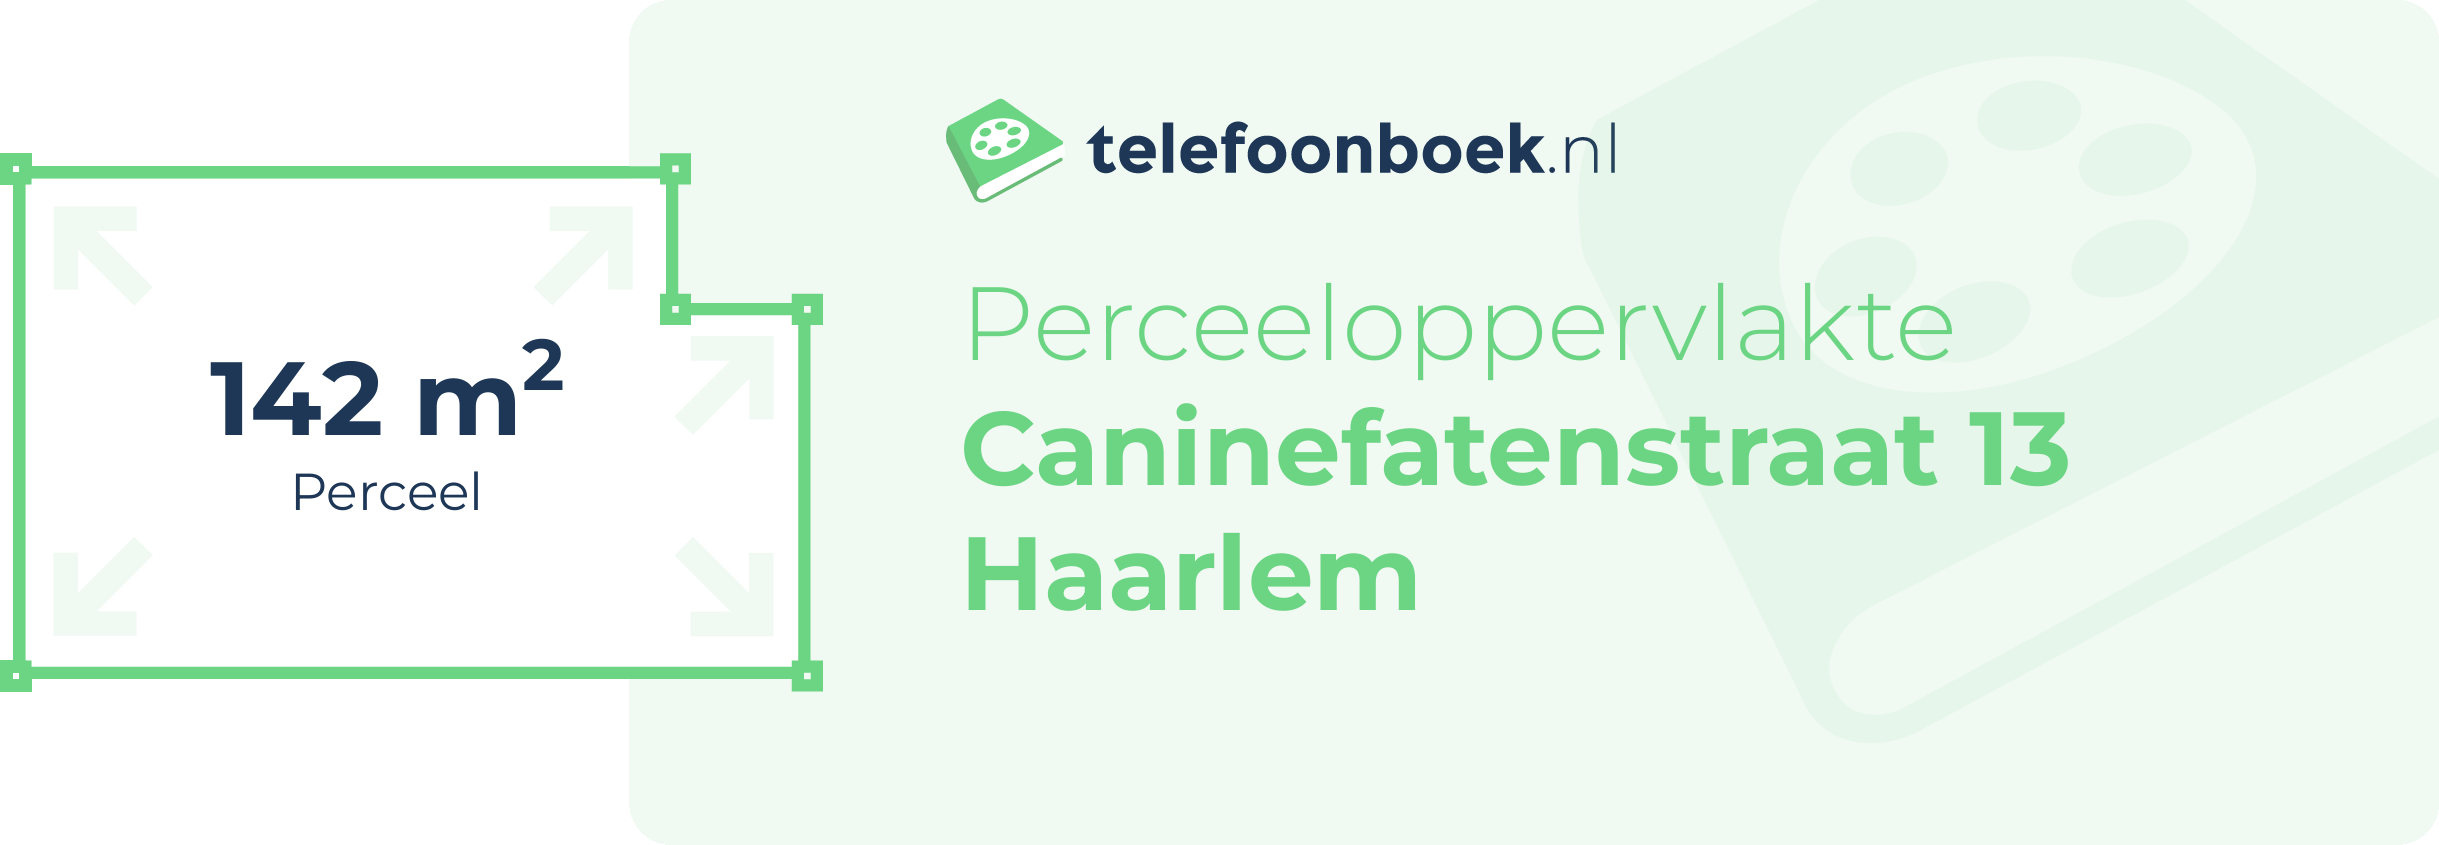 Perceeloppervlakte Caninefatenstraat 13 Haarlem